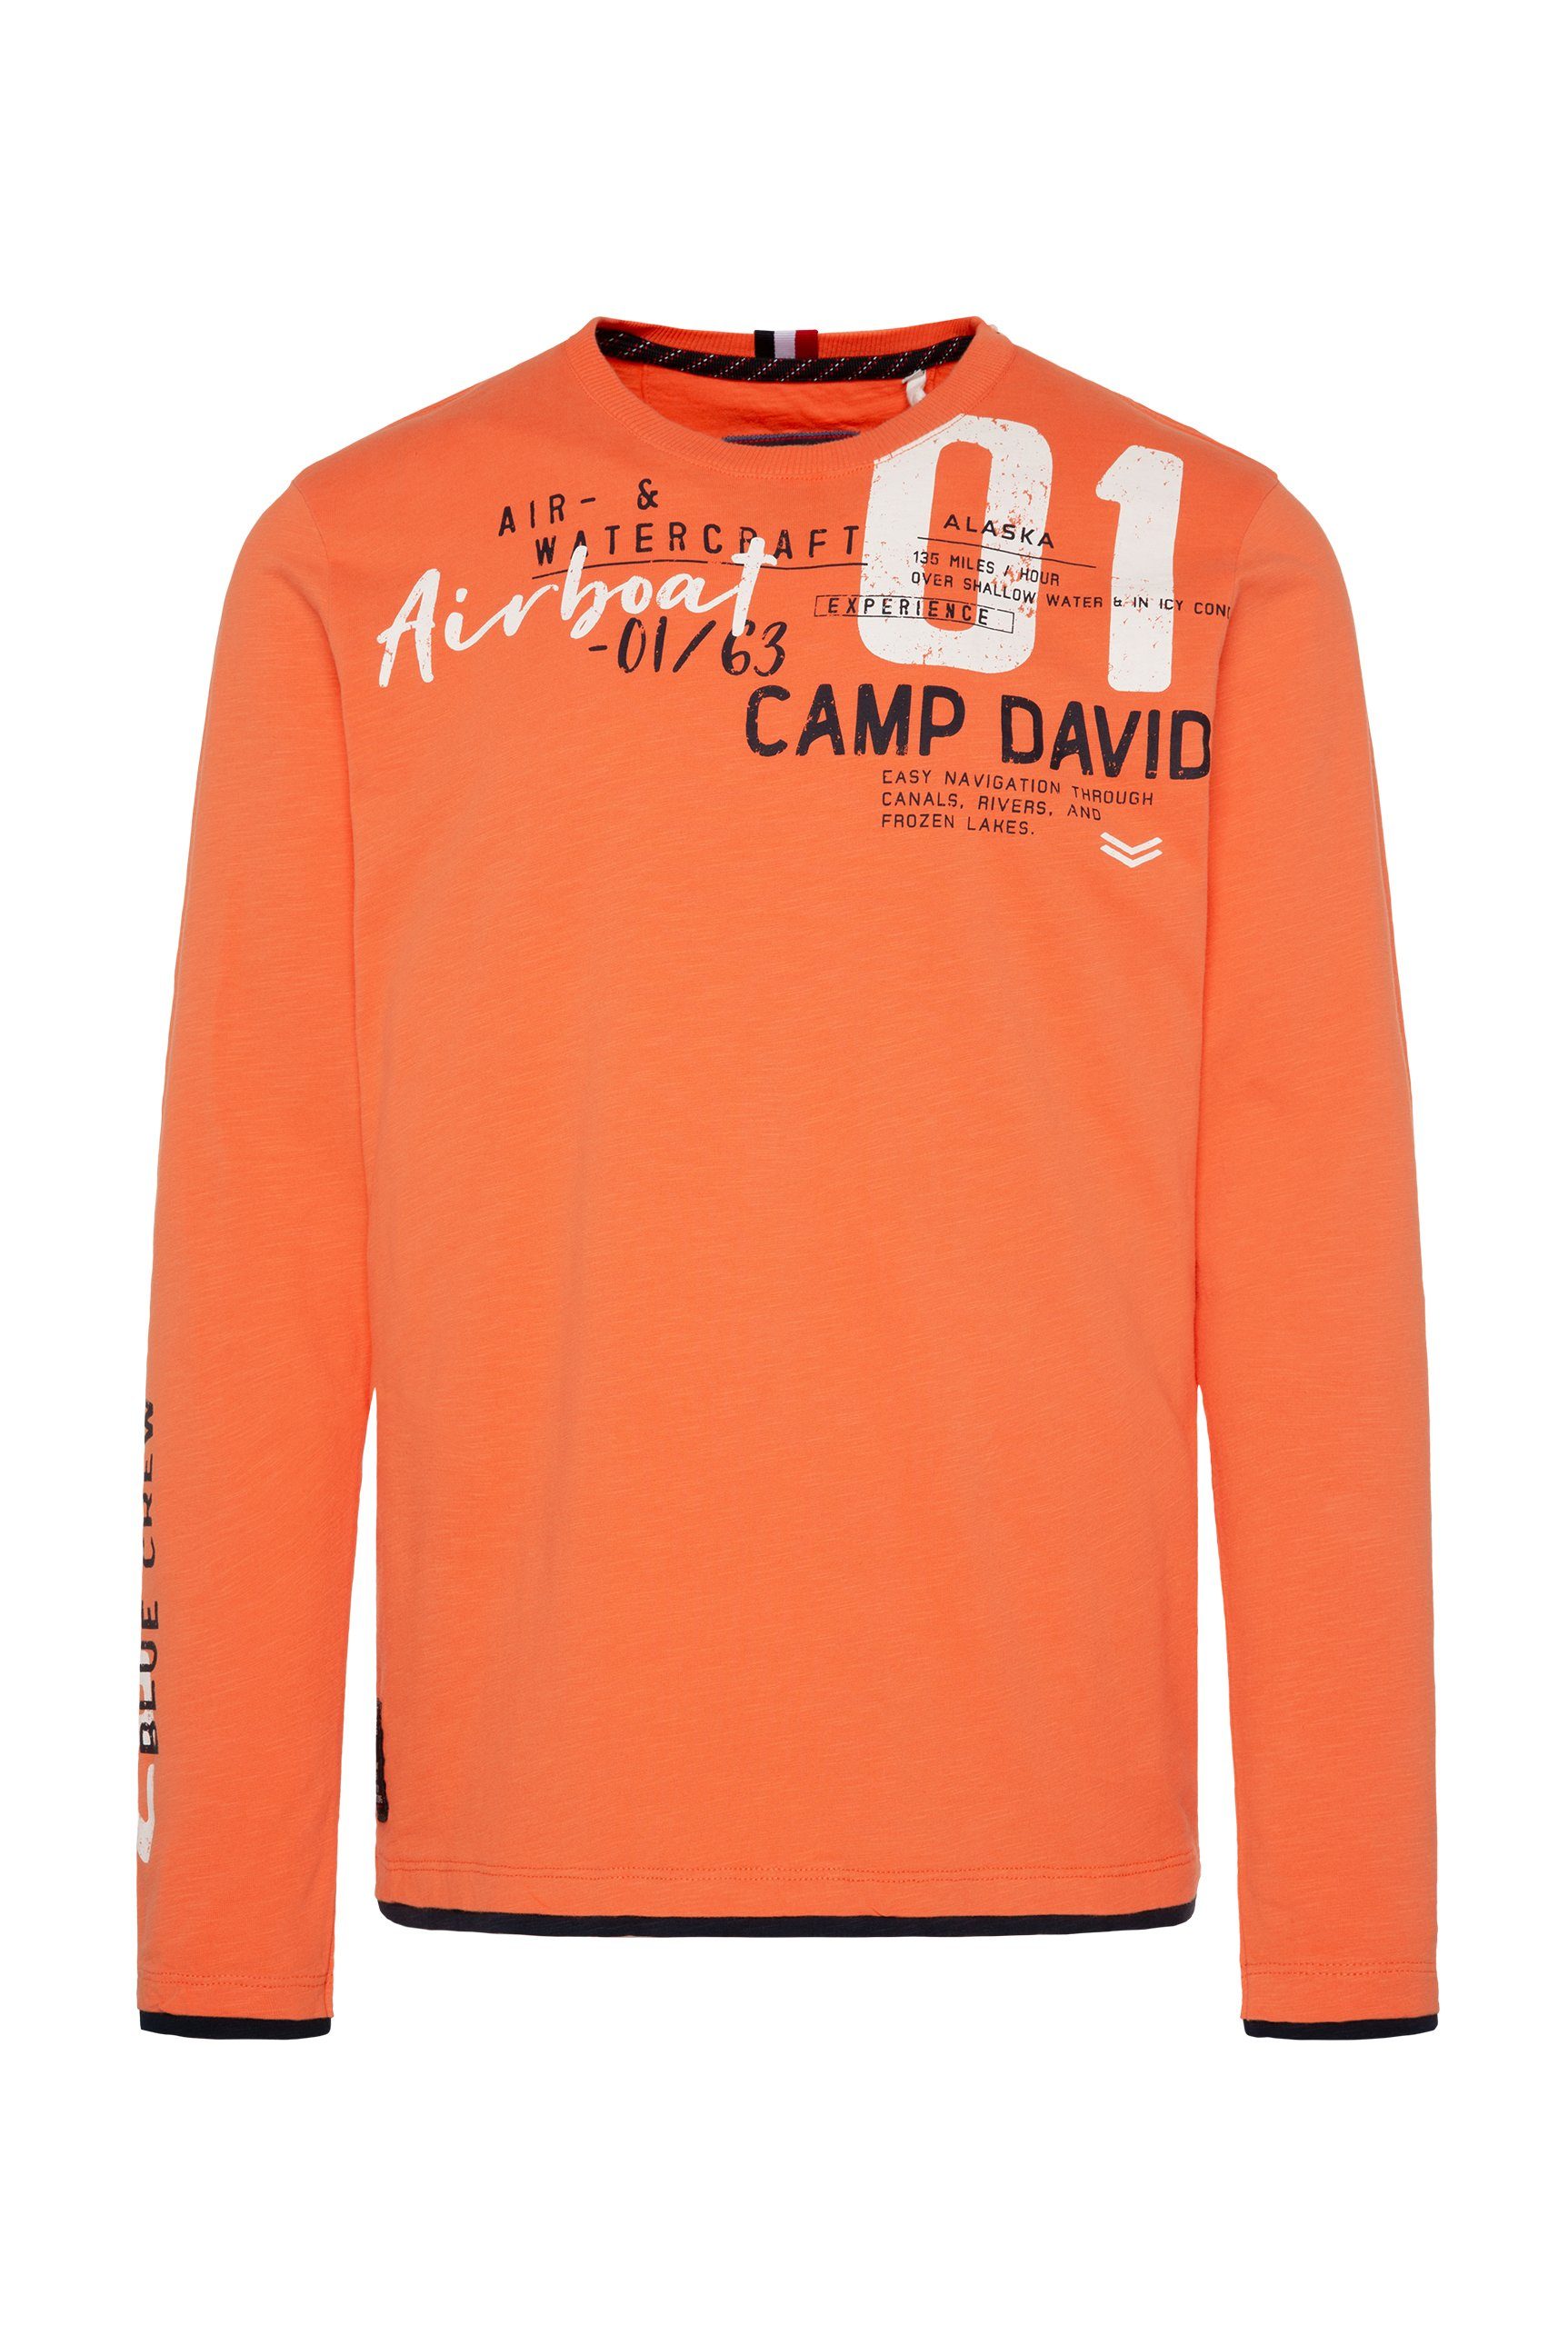 CAMP DAVID Langarmshirt mit Label im Prints Used-Look mission orange